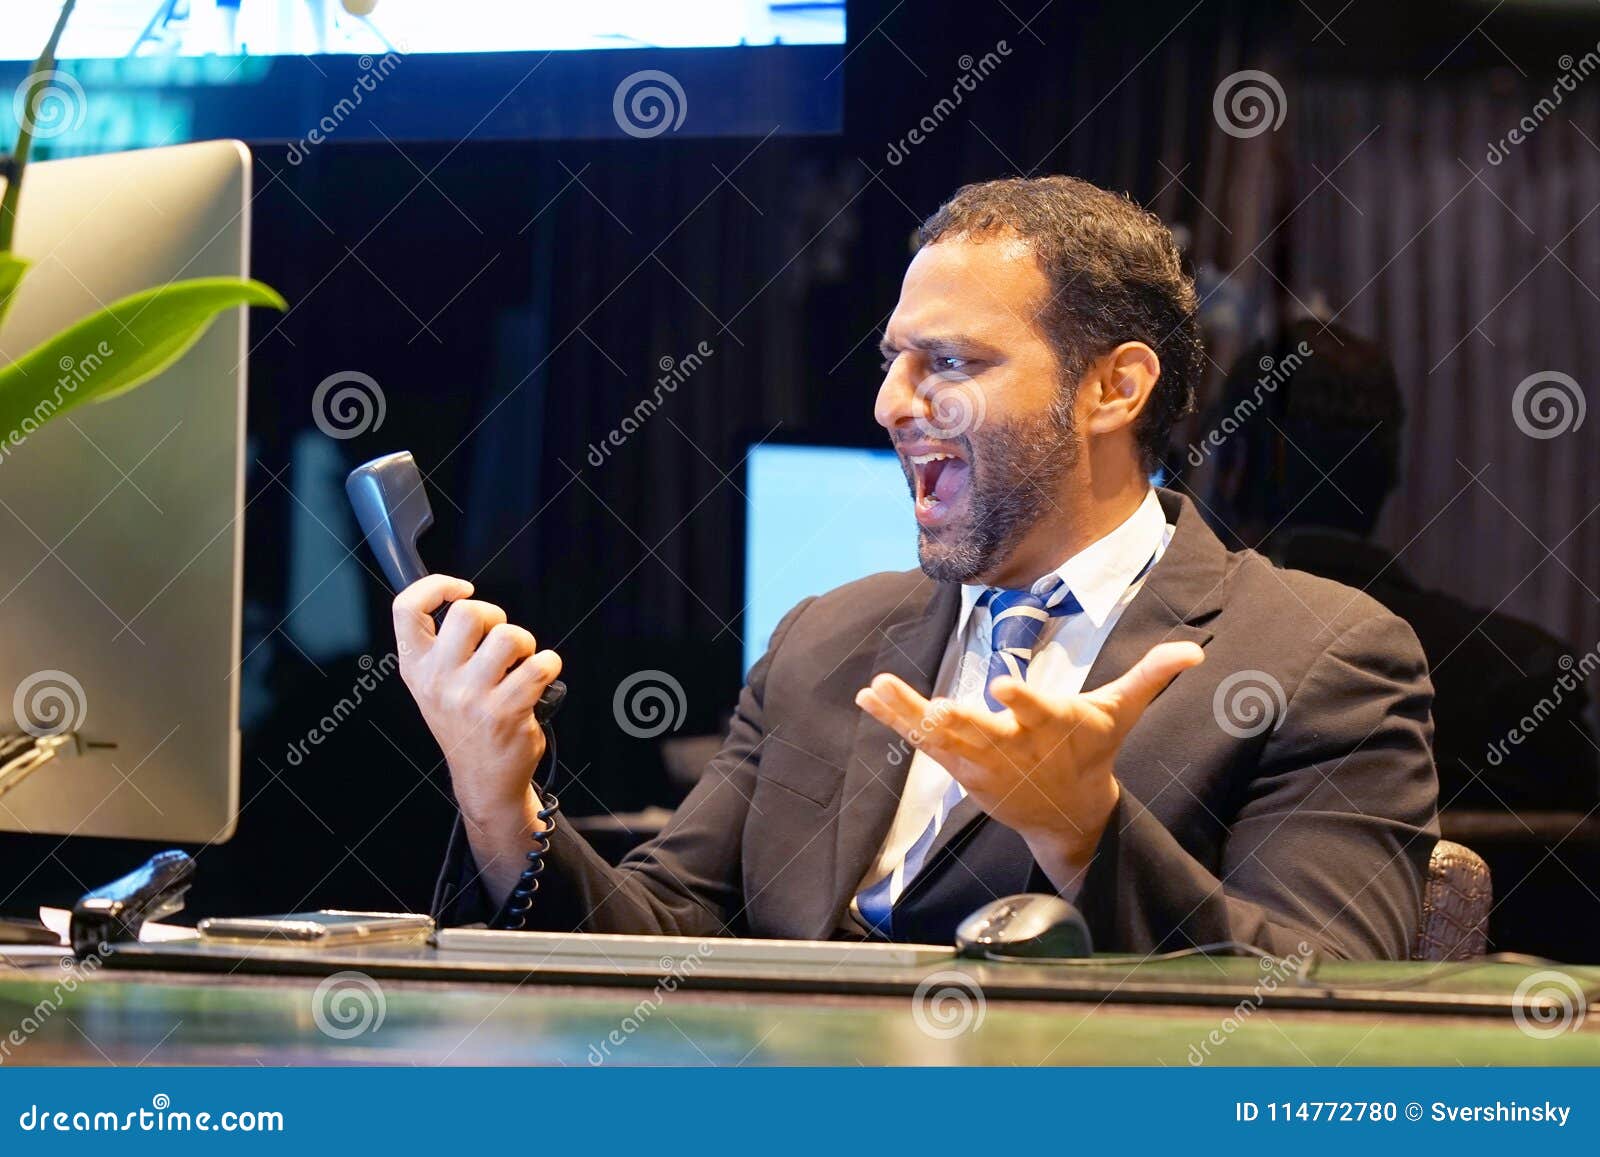 Secretary Answering Phone Calls Stock Photo - Image of face, businessman:  114772780